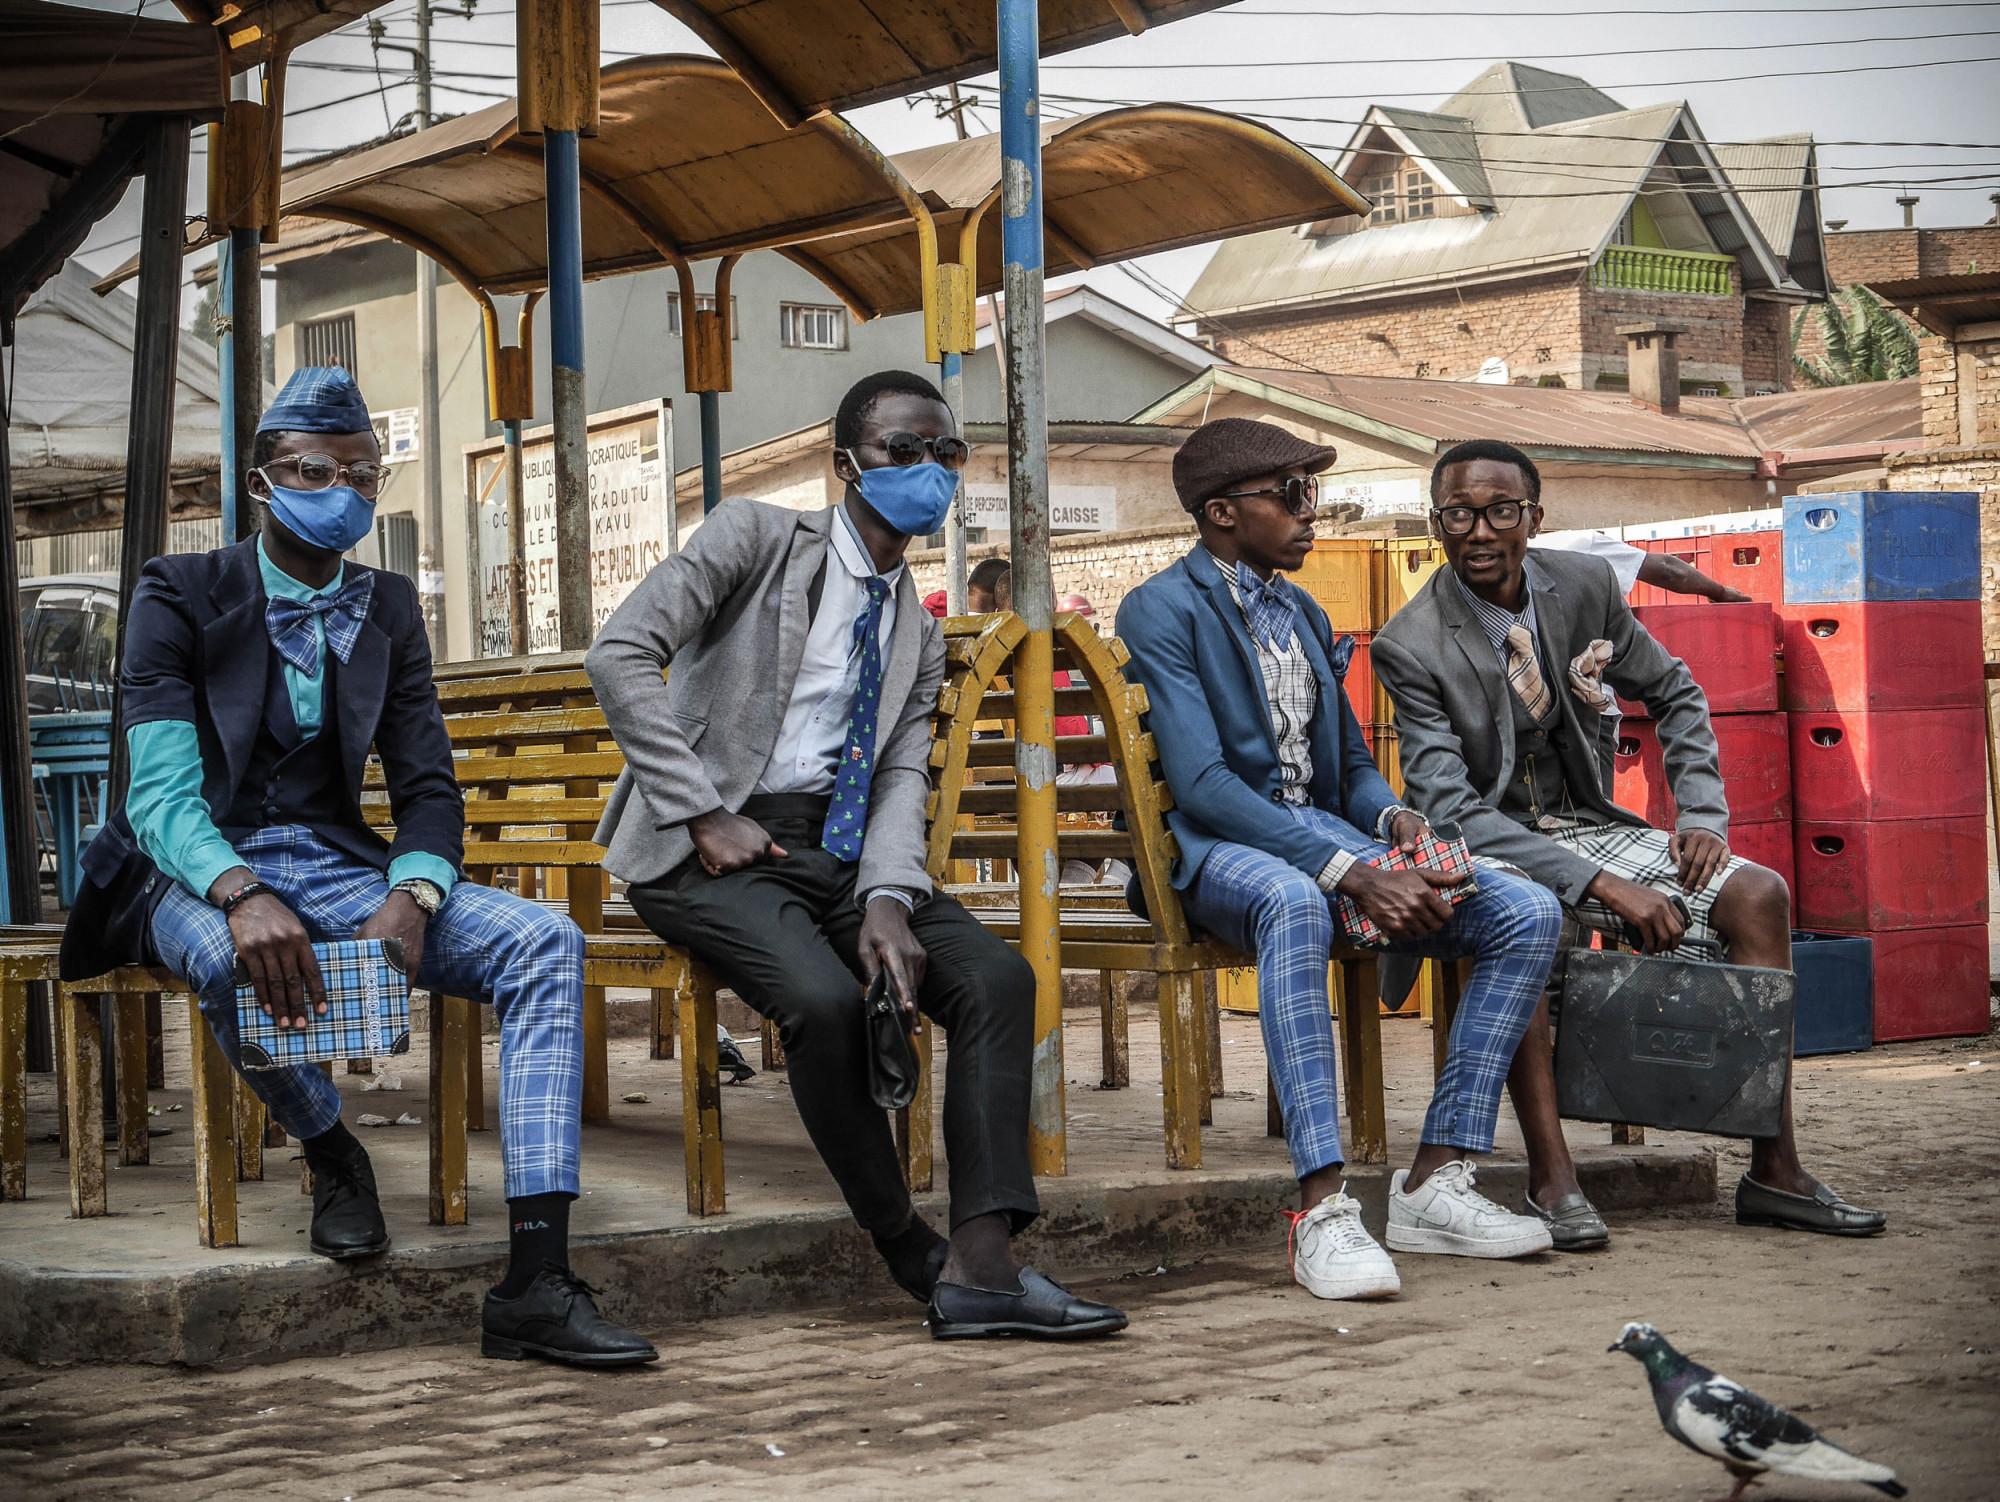 Bukavu, DRC, August 2020. Bukavu’s fashionistas show off their style on a street this month. © Raissa Karama Rwizibuka for Fondation Carmignac